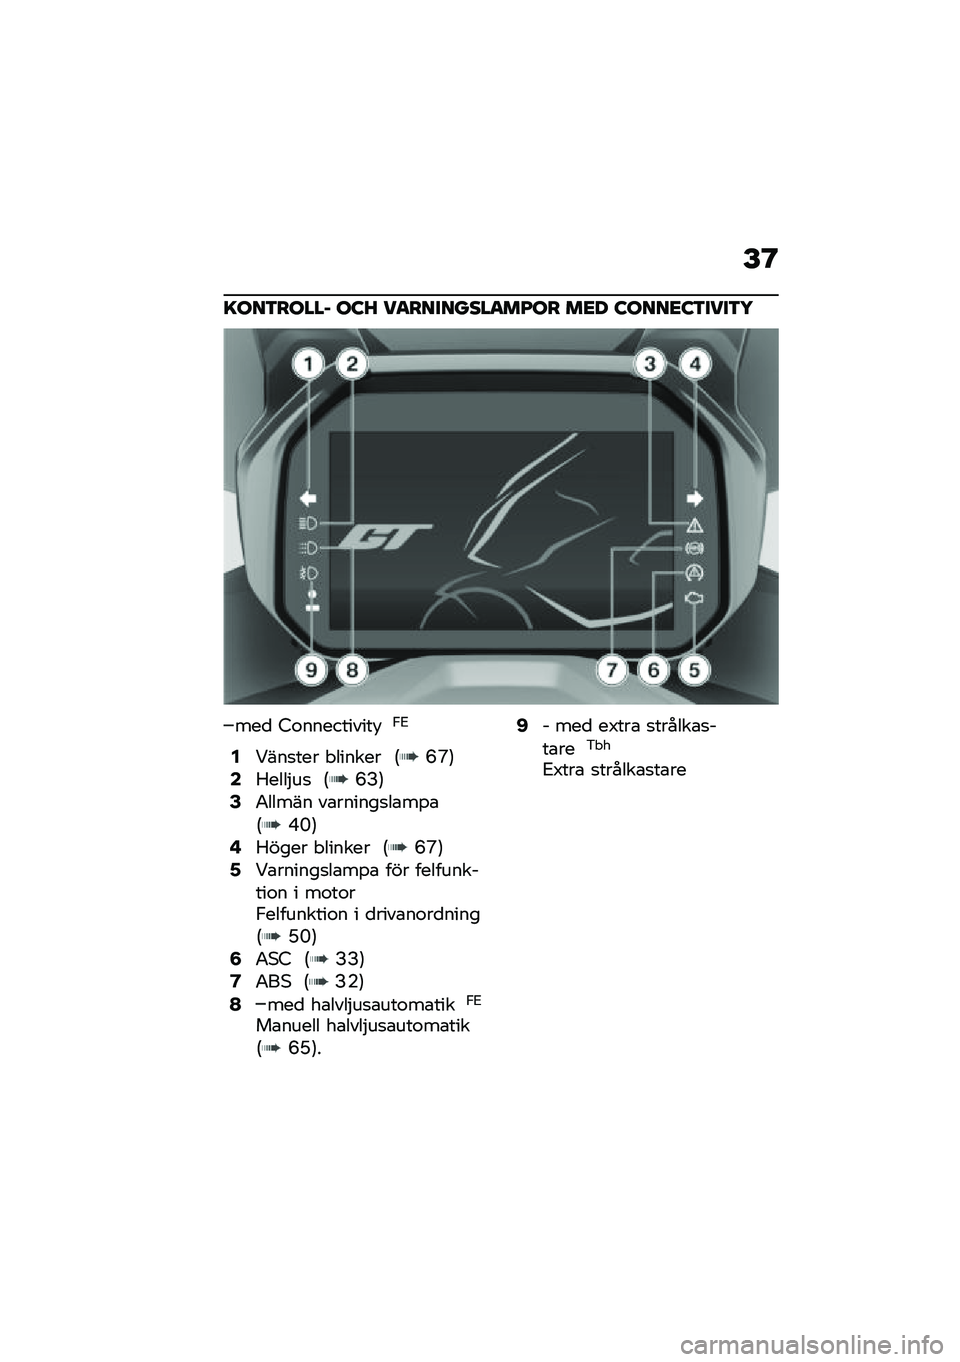 BMW MOTORRAD C 400 GT 2020  Instruktionsbok (in Swedish) �F�@
�=���3�����, ��:�A ��
��������
��I�� ��<� �:����<�:�3����3�5
���
 �8�\f����������!�0�6
�4�9���
��� � ������ �:�F�N�;�6�5����$��
 �:�F�B�;�8�4�